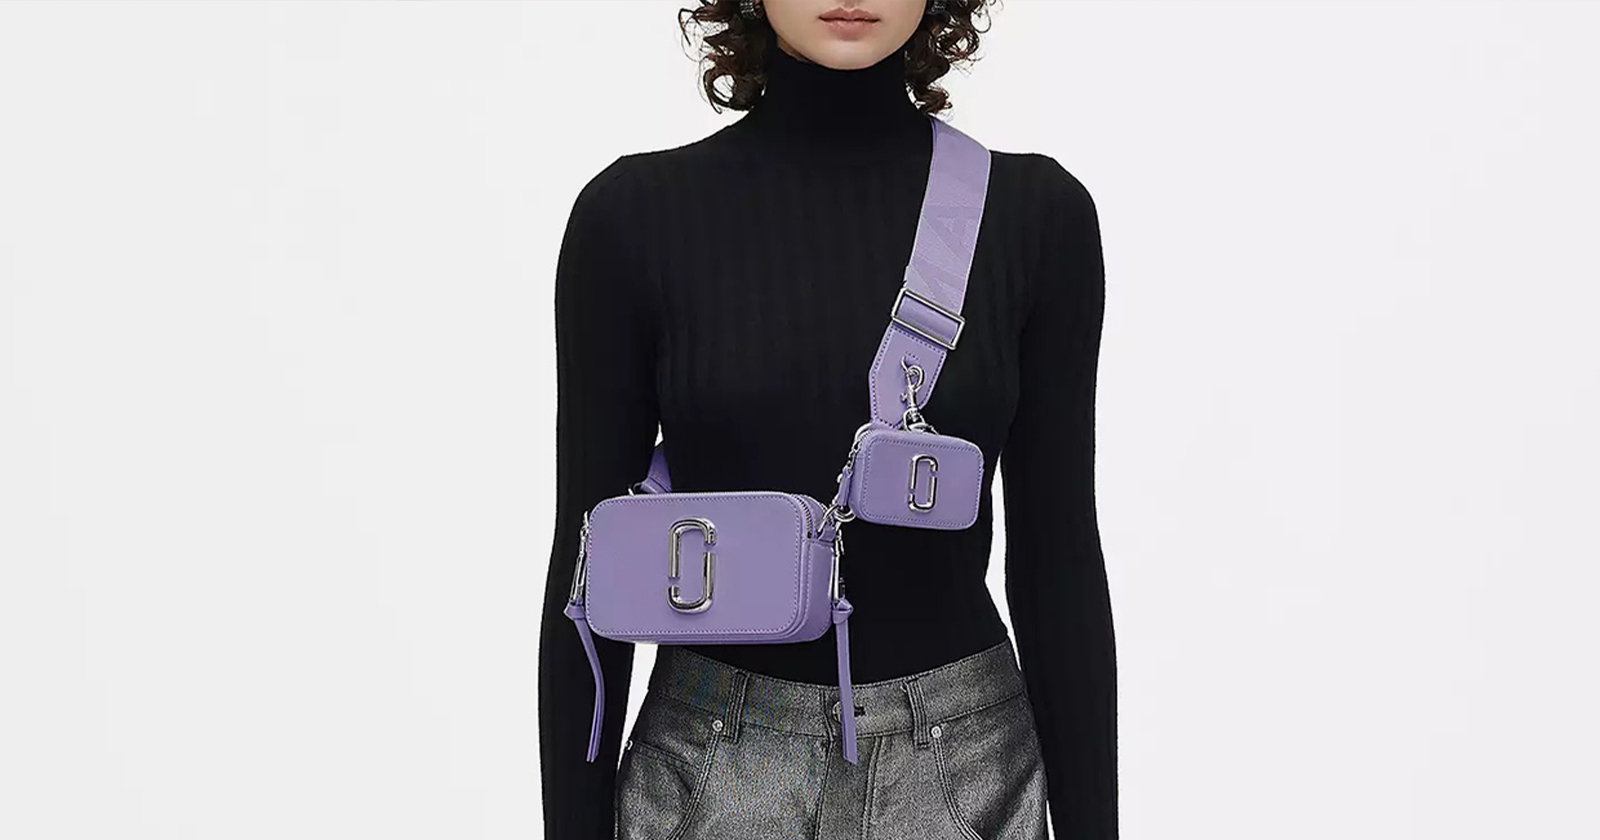 Marc Jacobs The Snapshot Cowhide Color-Block Camera Bag (Shoulder bags)